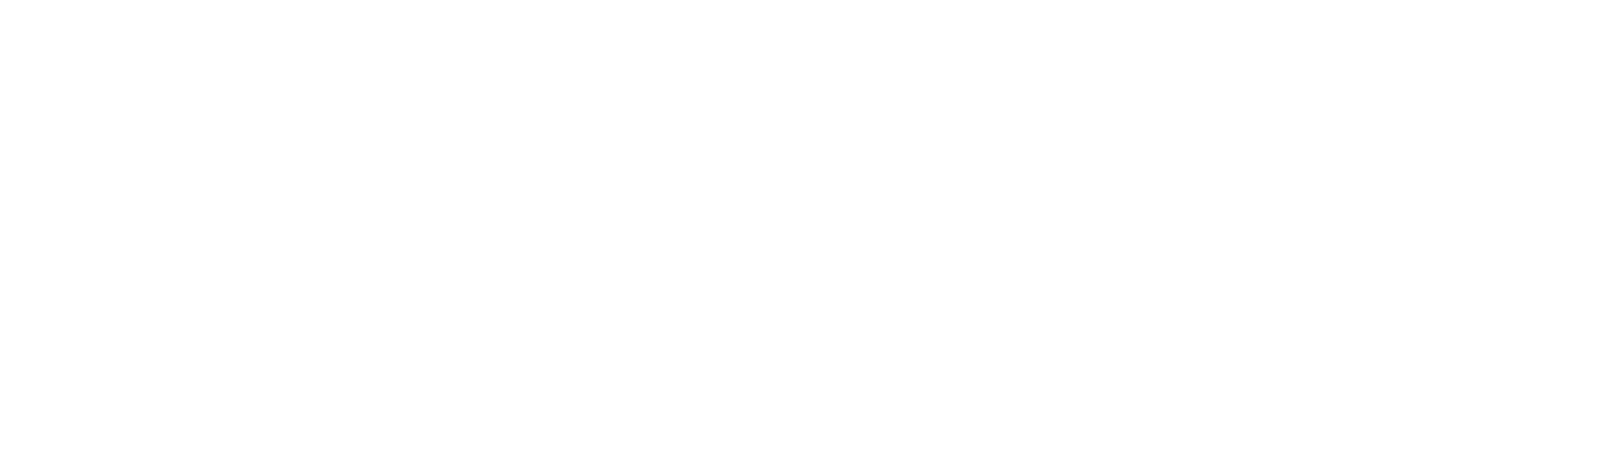 Ebos Group Logo groß für dunkle Hintergründe (transparentes PNG)